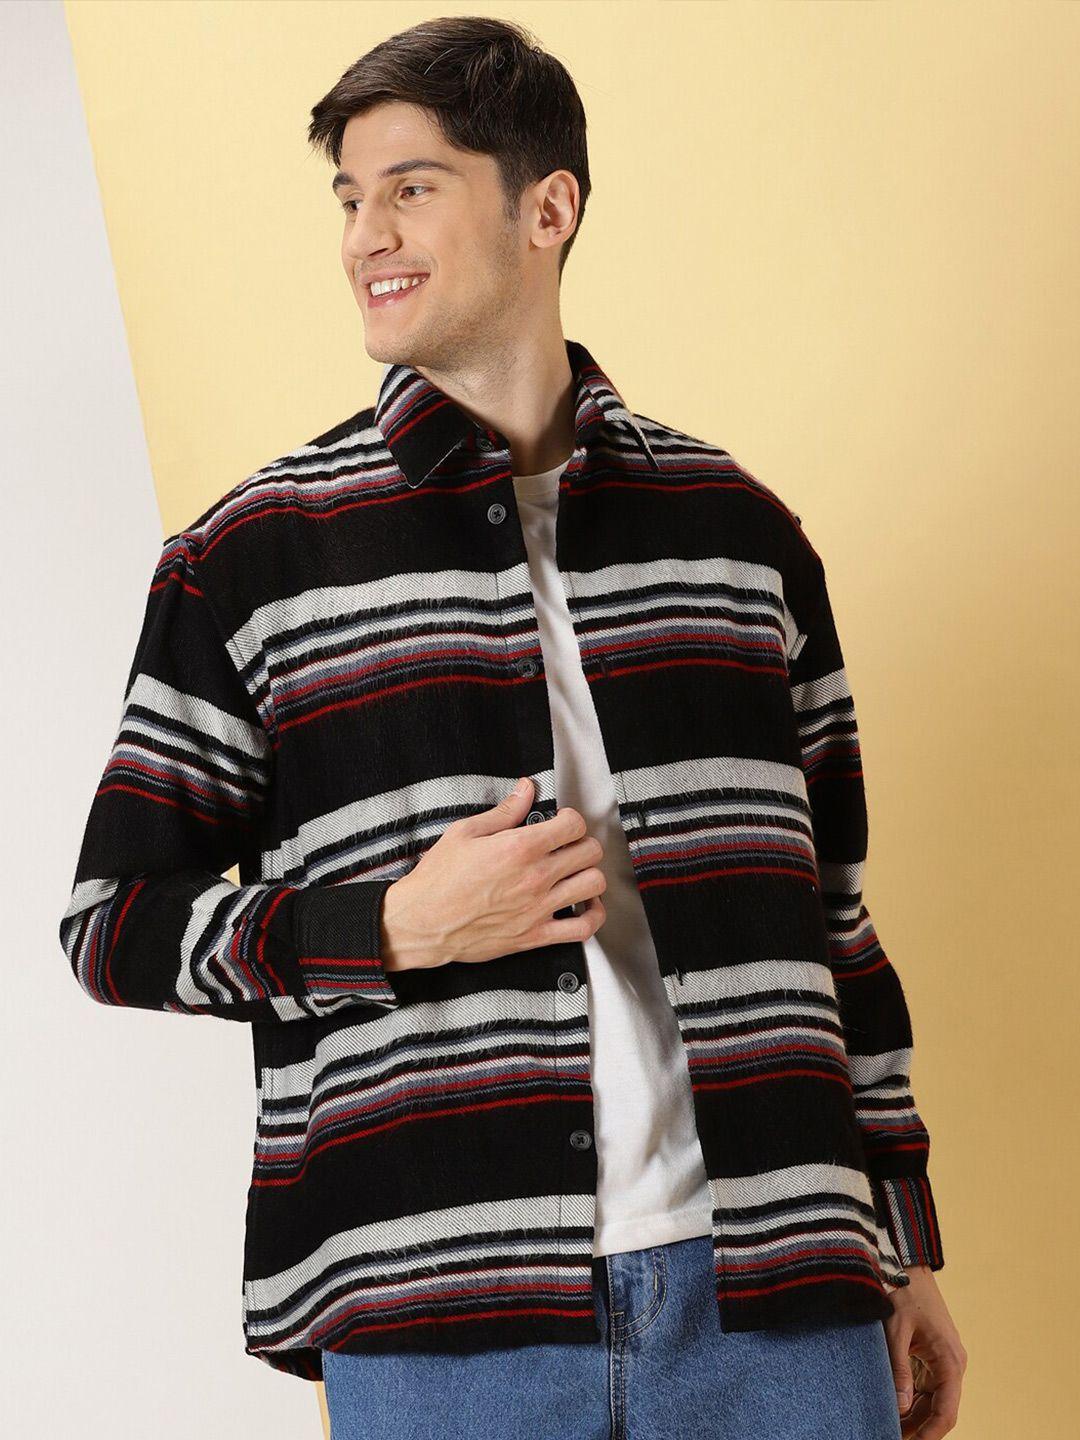 thomas scott standard horizontal stripes cotton opaque striped casual shirt